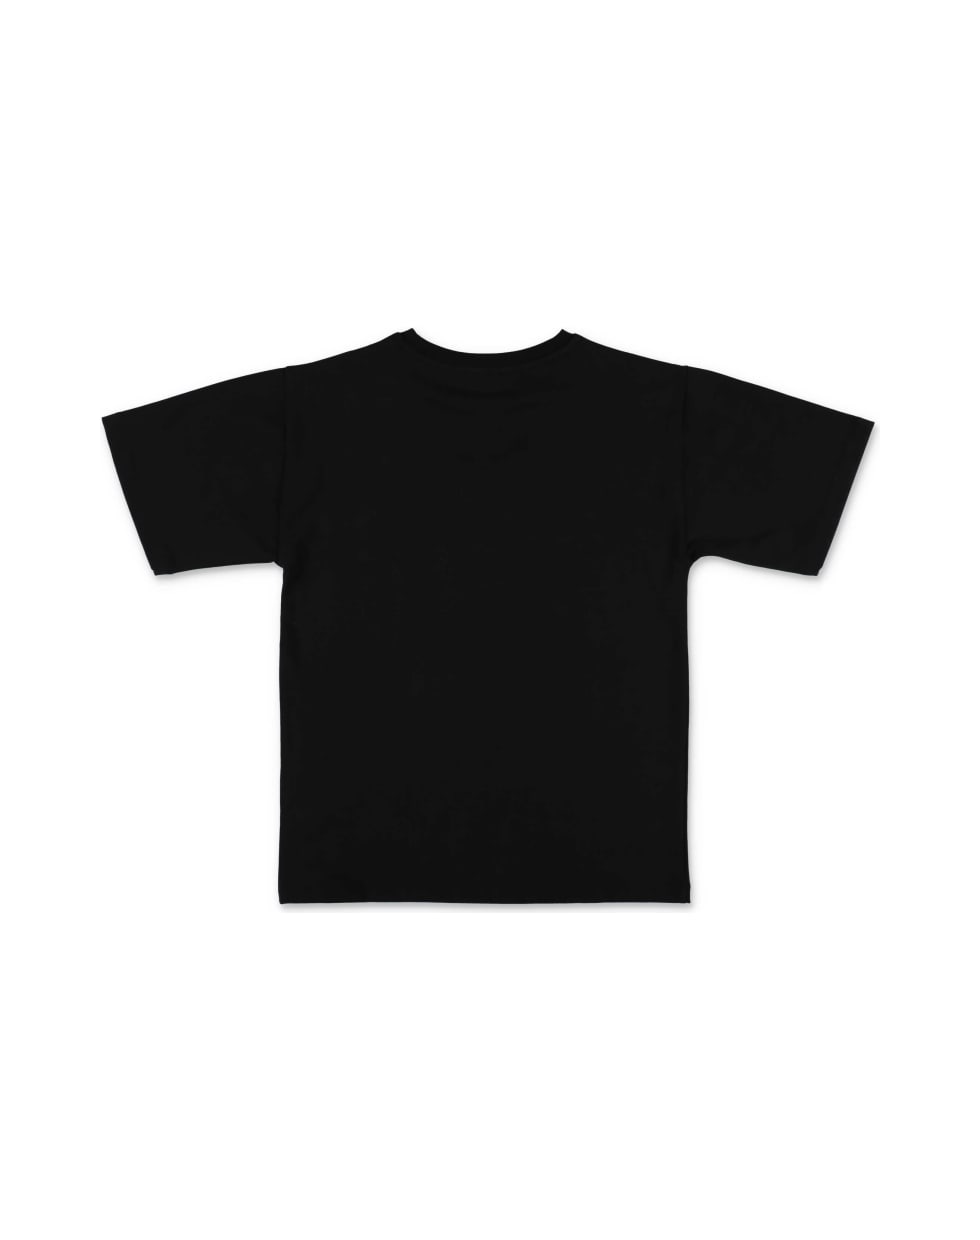 Moschino T-shirt Nera In Jersey Di Cotone - Nero